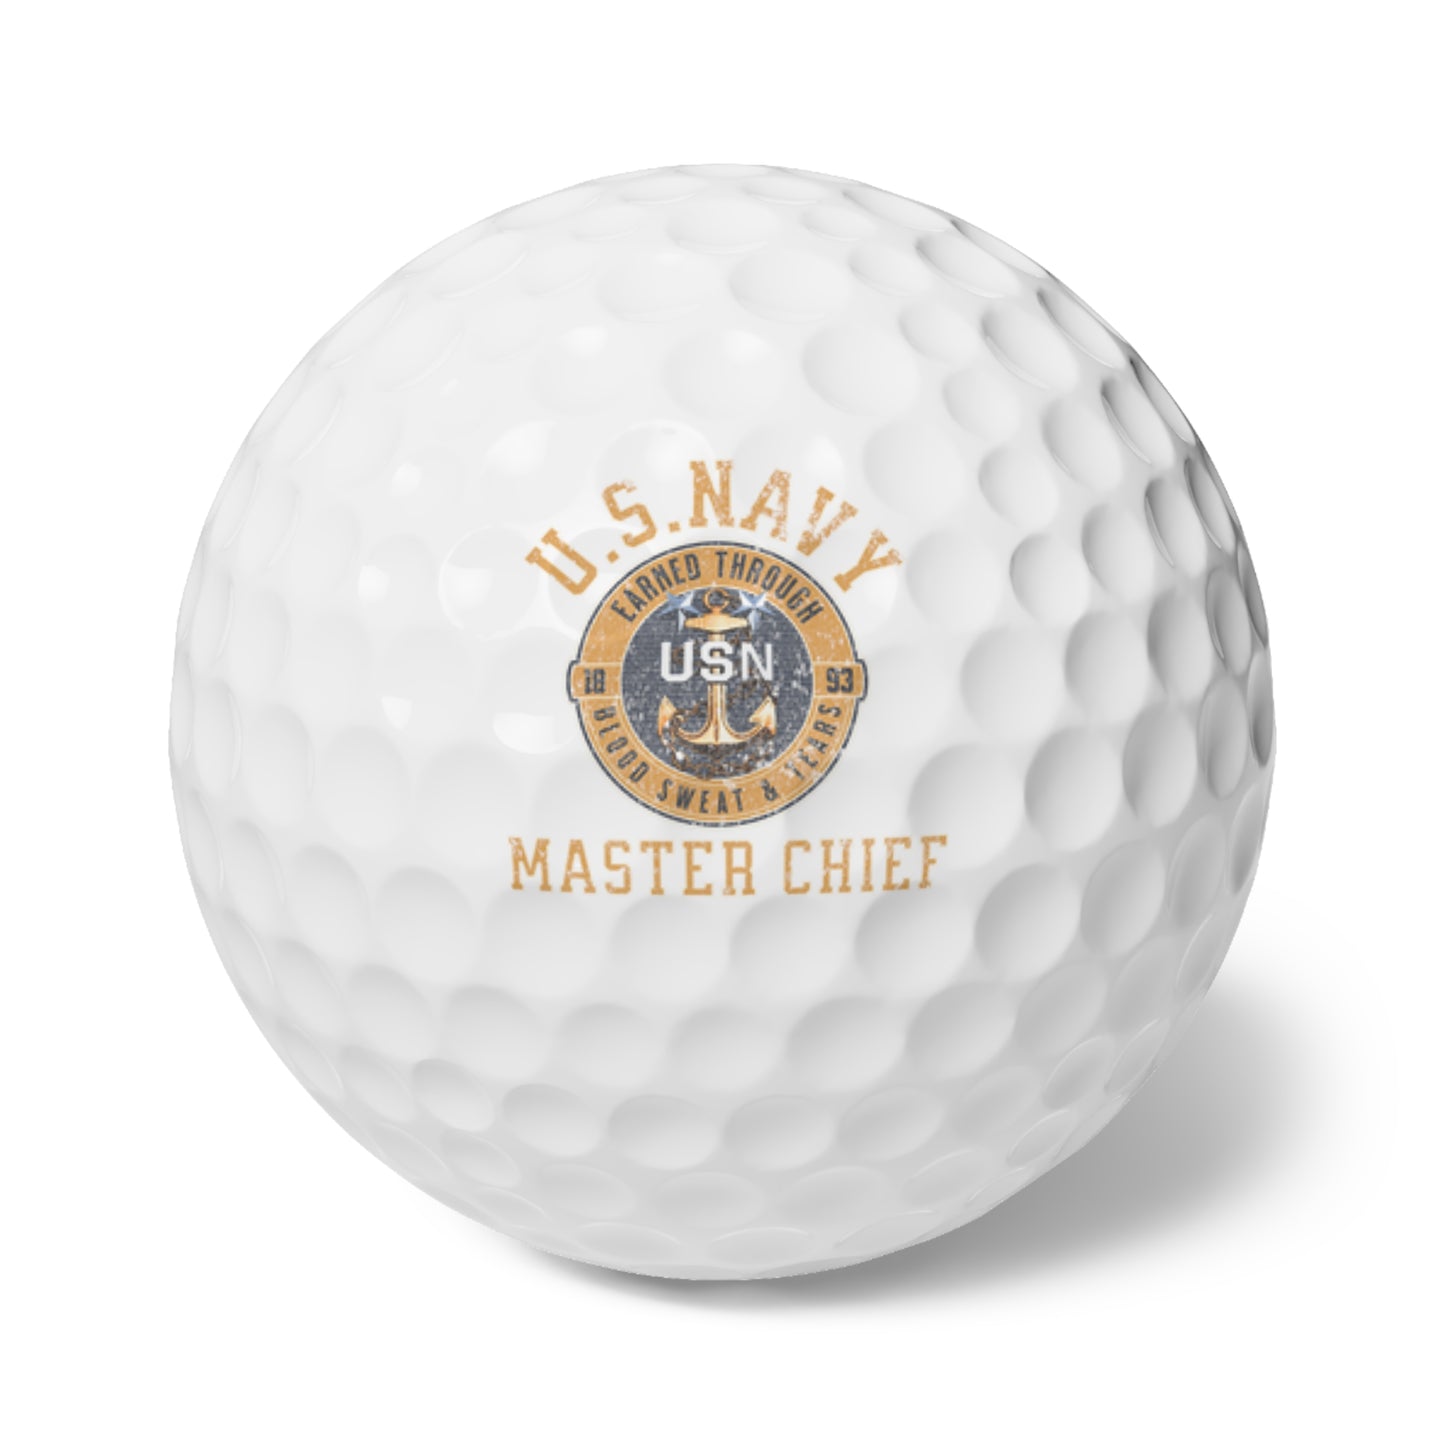 Master Chief Golf Balls, 6pcs